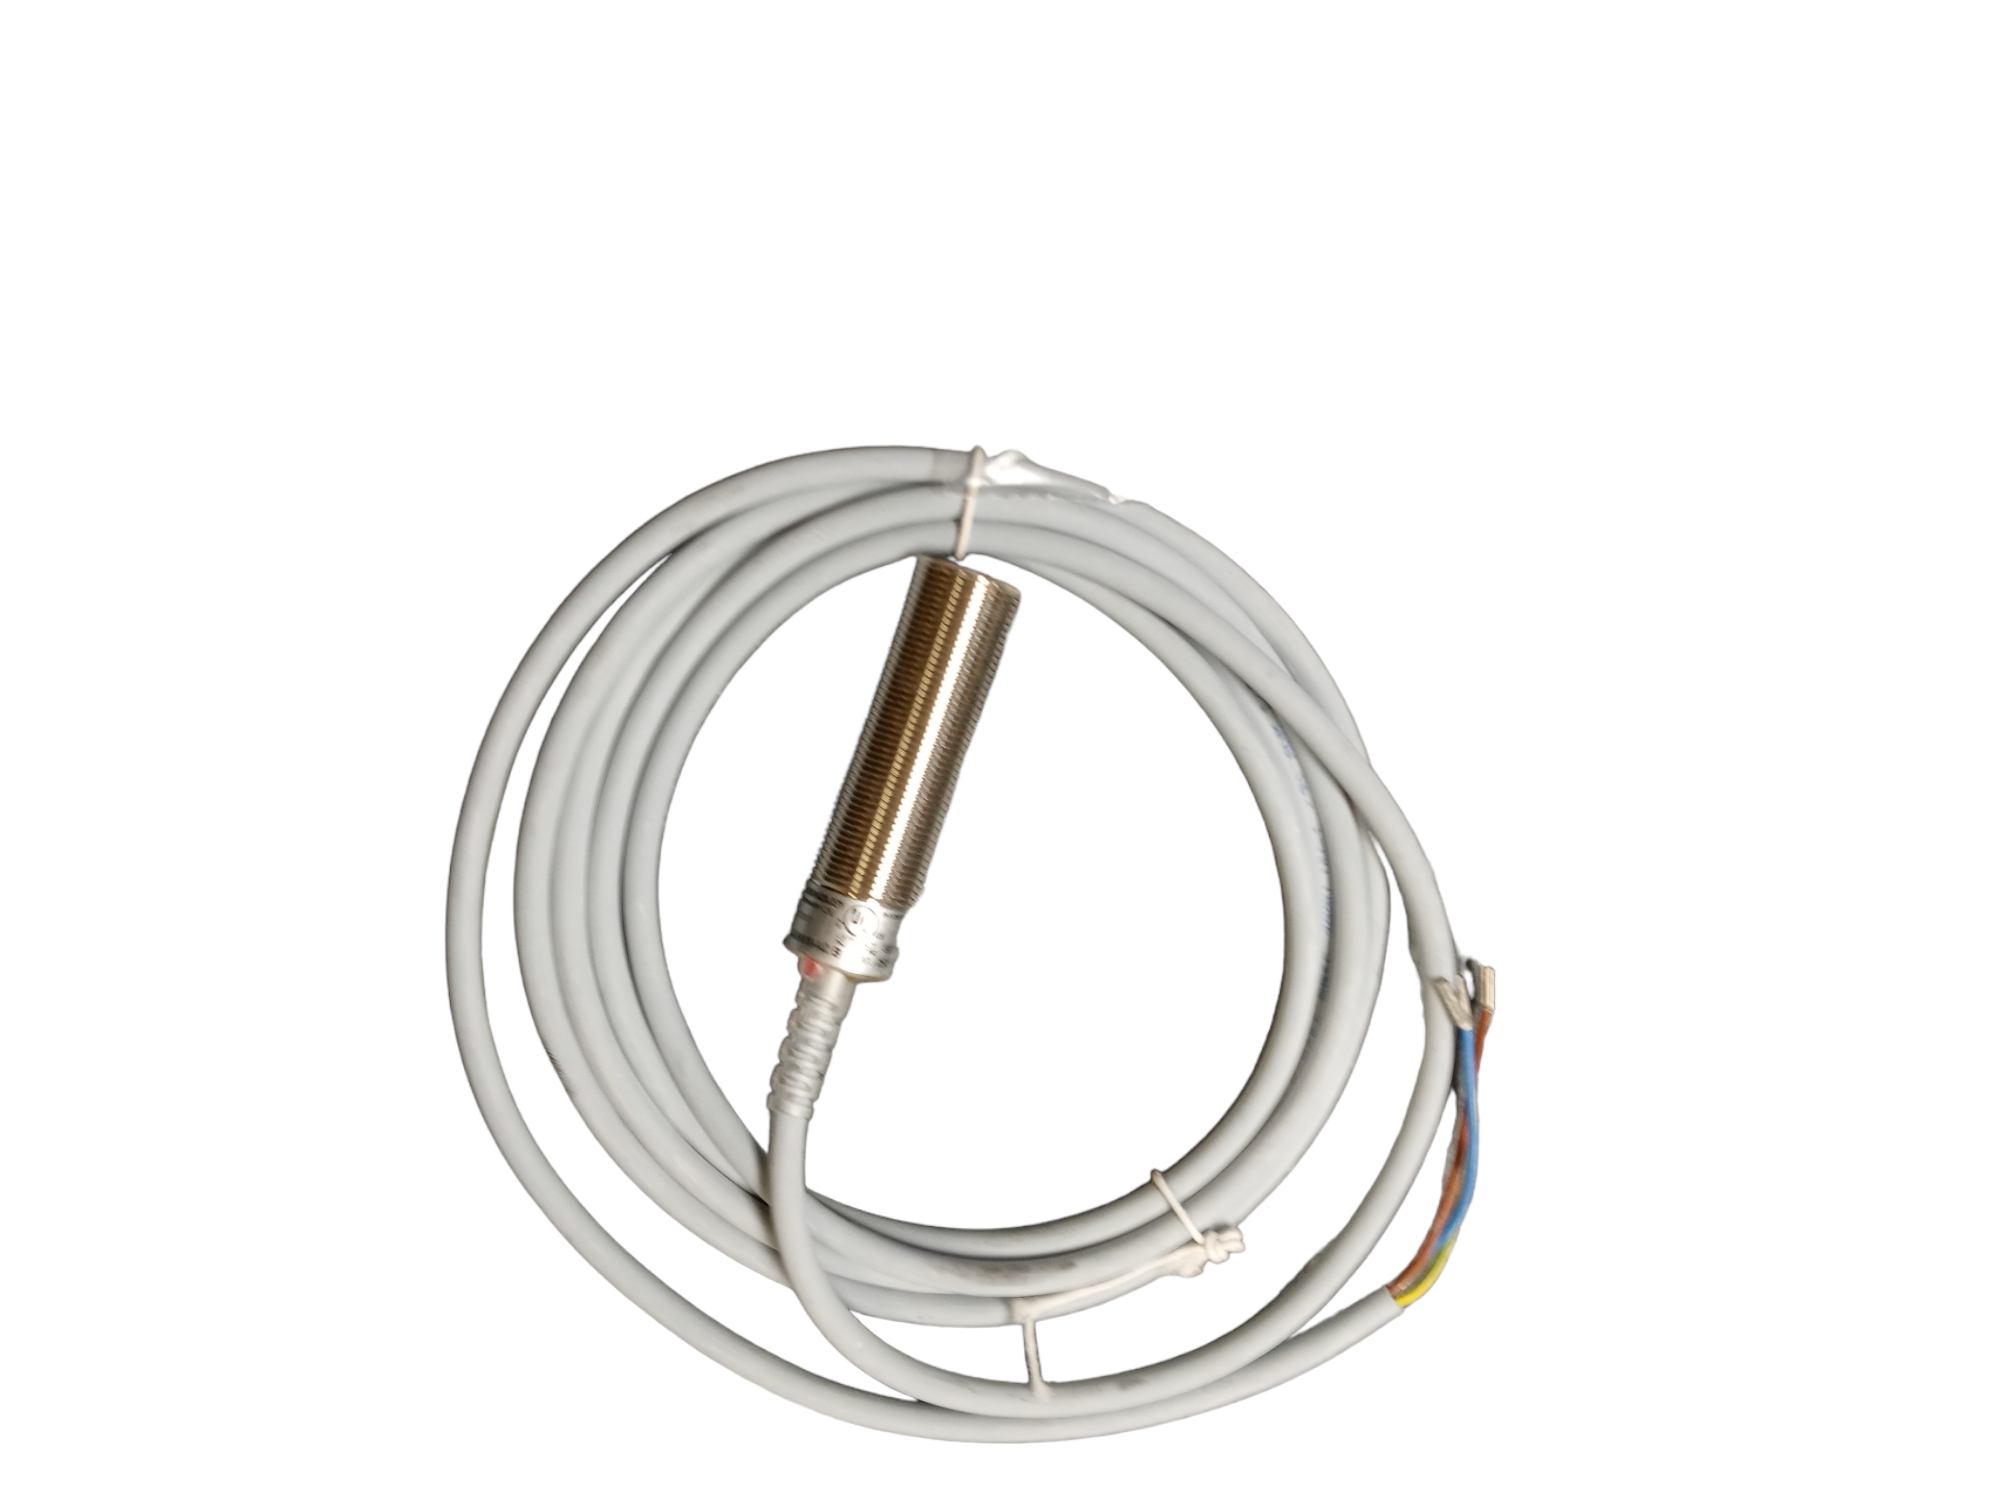 ALLEN-BRADLEY, 872C-A5N18-A2, Proximity Sensor, Inductive, 18mm, 20-250VAC, 2 Wire - NEW IN ORIGINAL PACKAGING